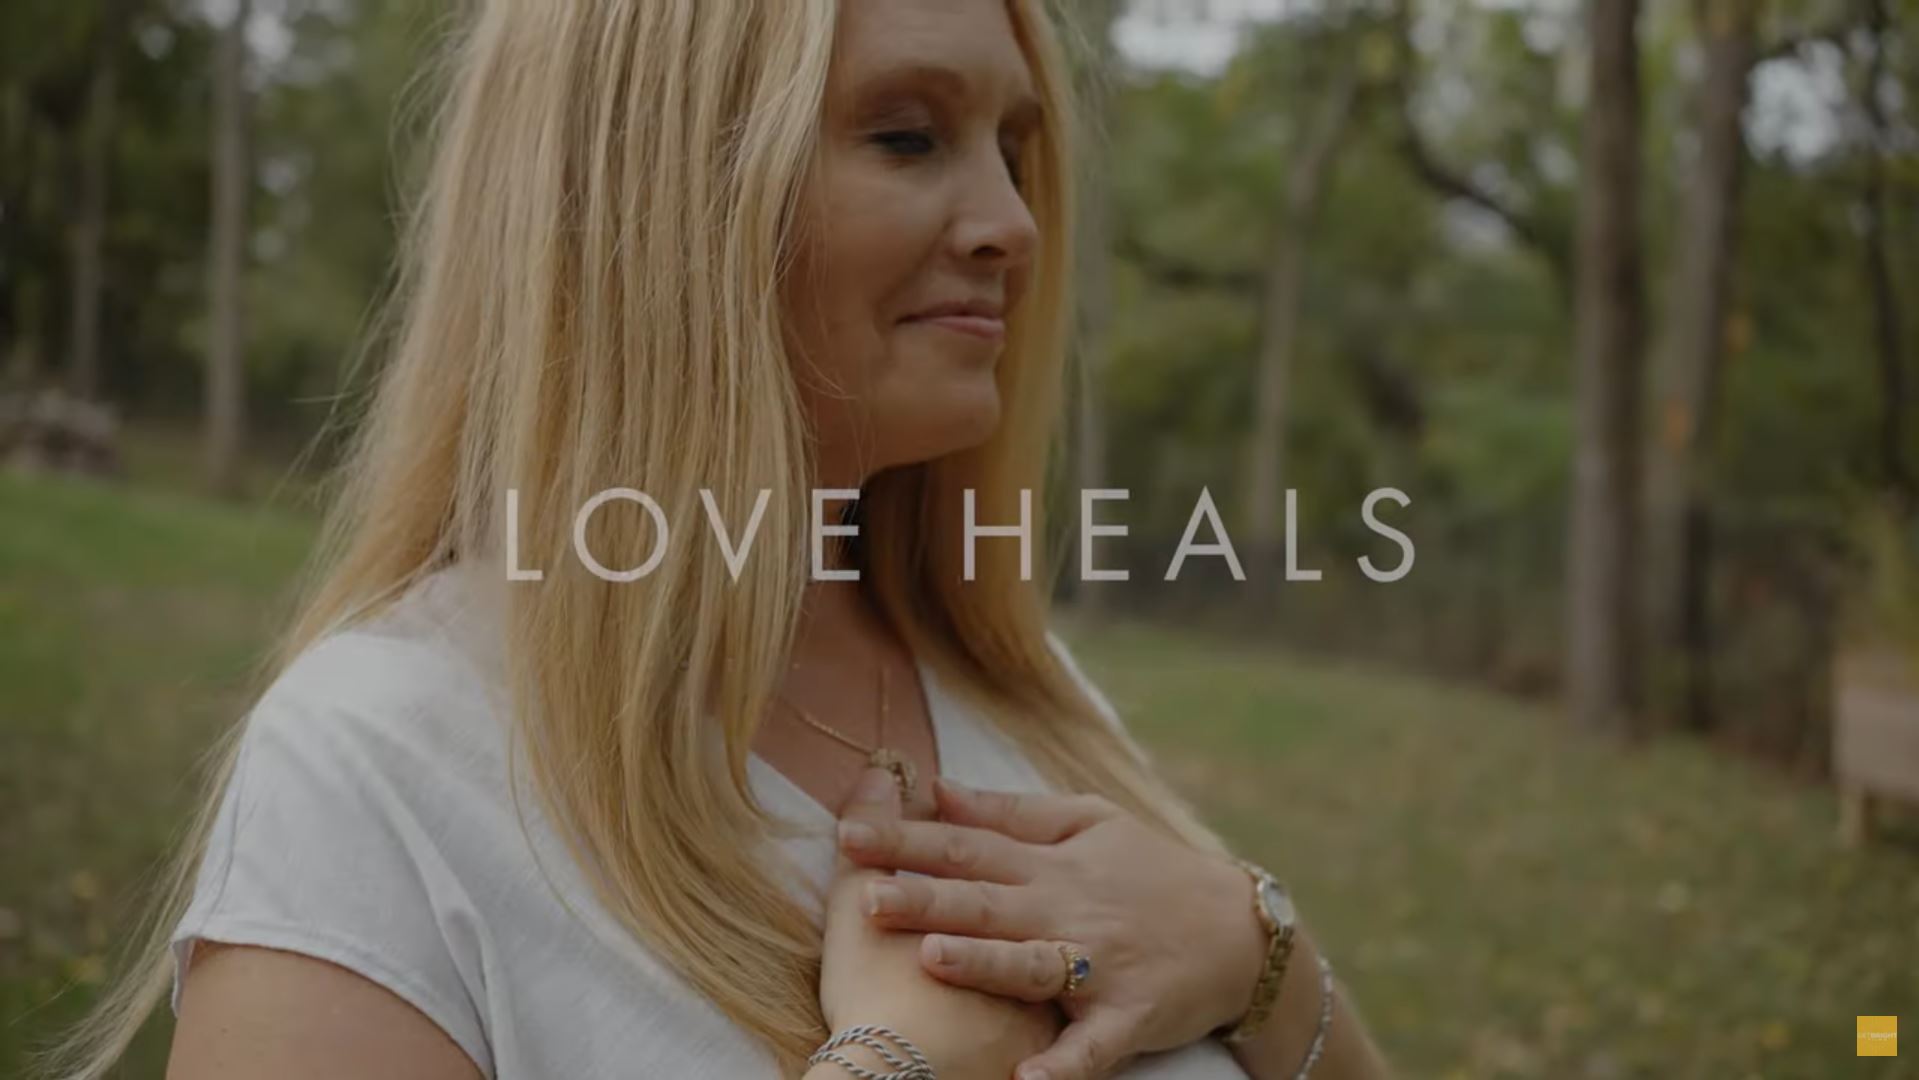 LOVE HEALS 30-Second Trailer